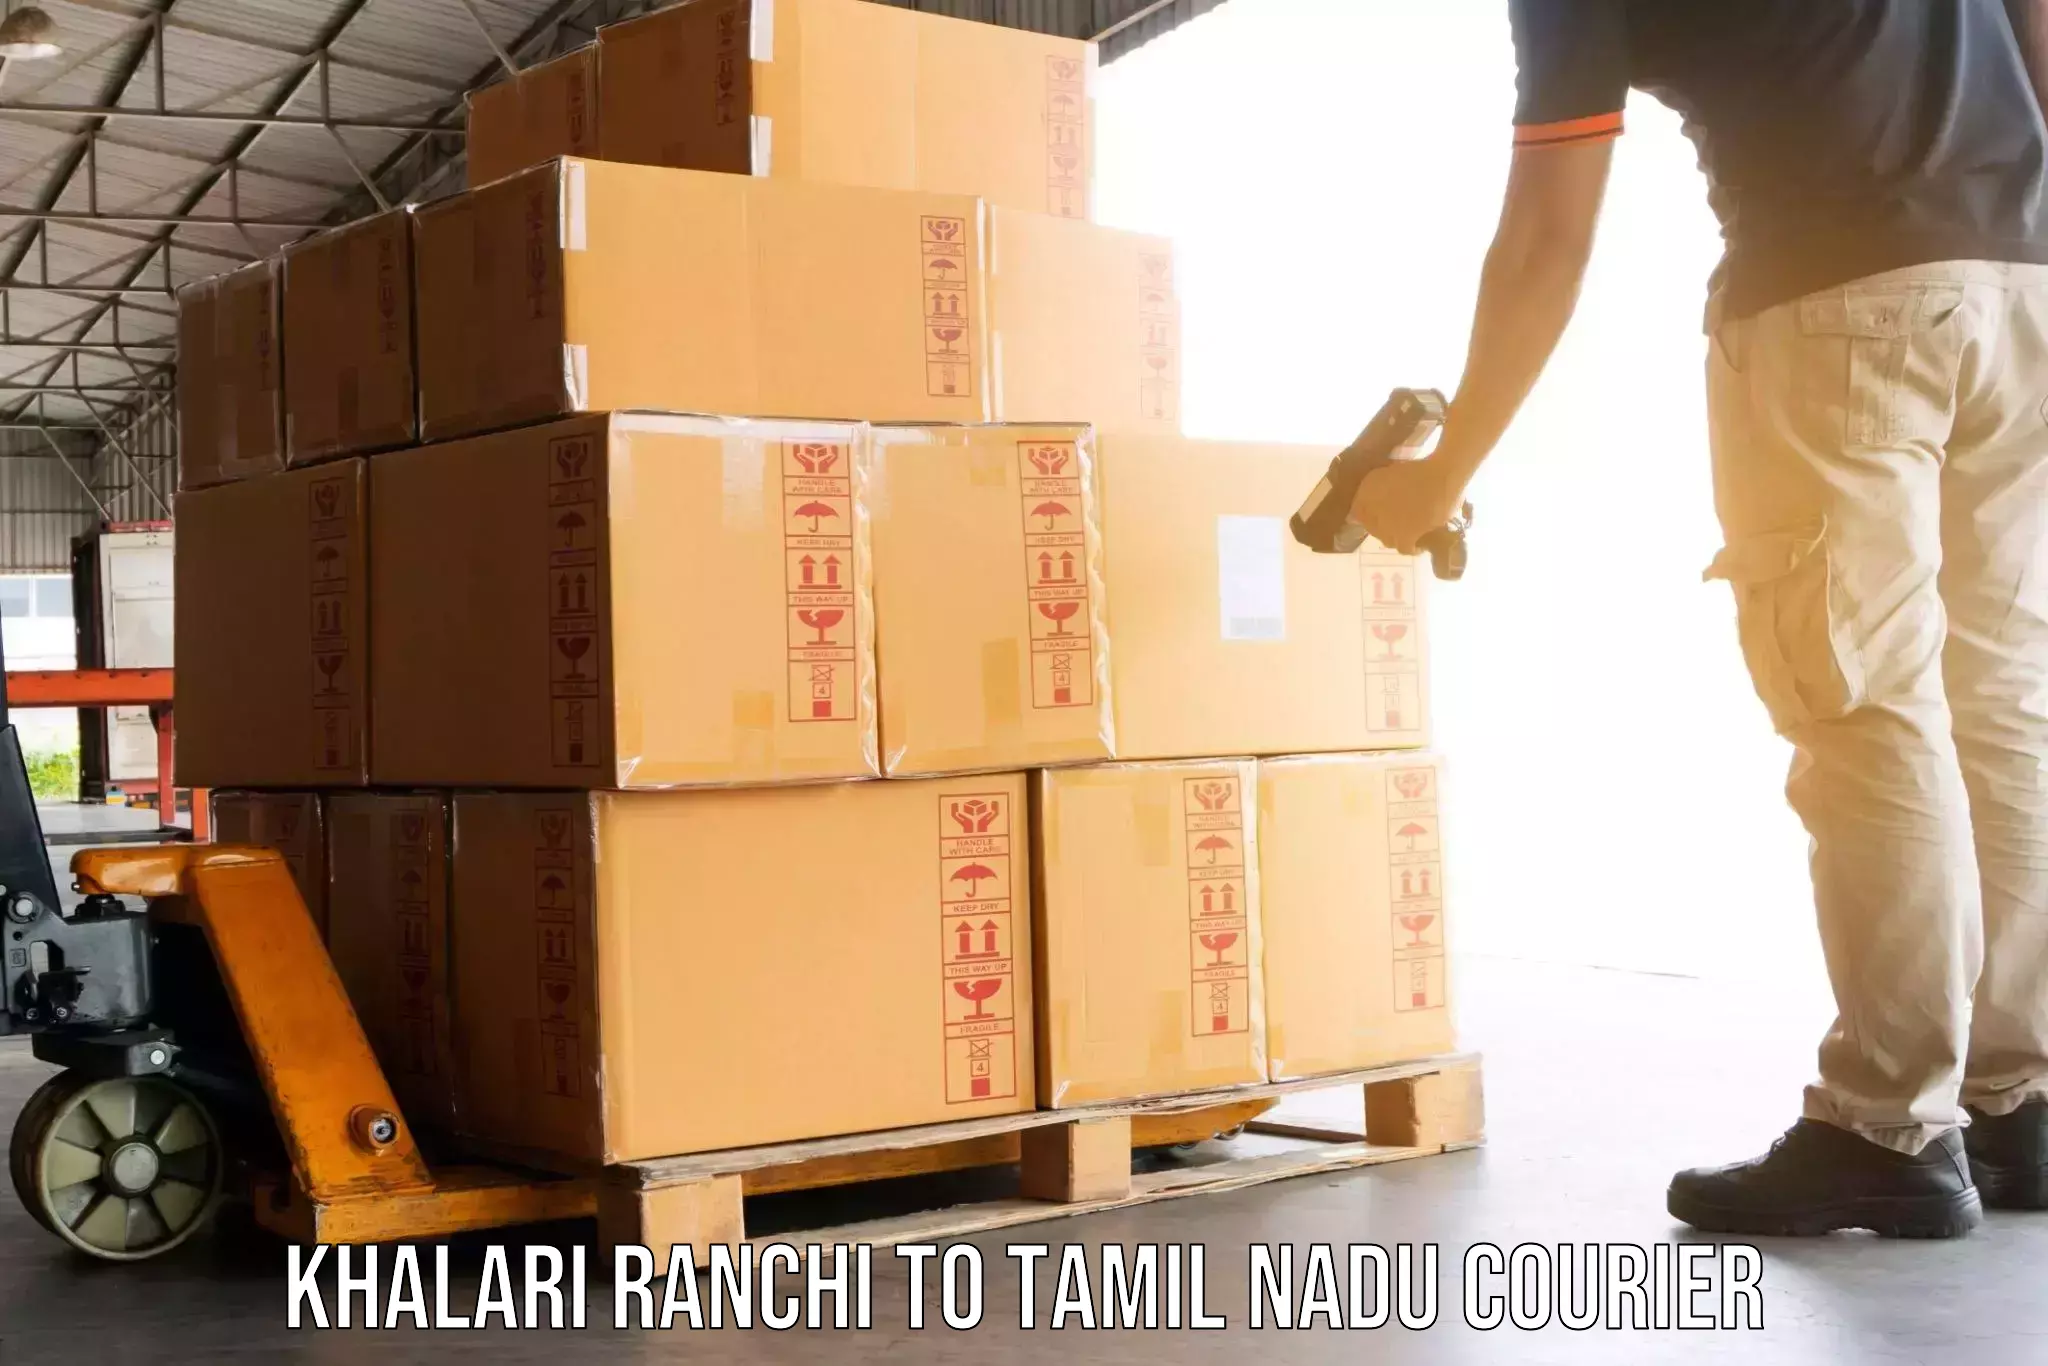 Budget-friendly movers Khalari Ranchi to Tamil Nadu